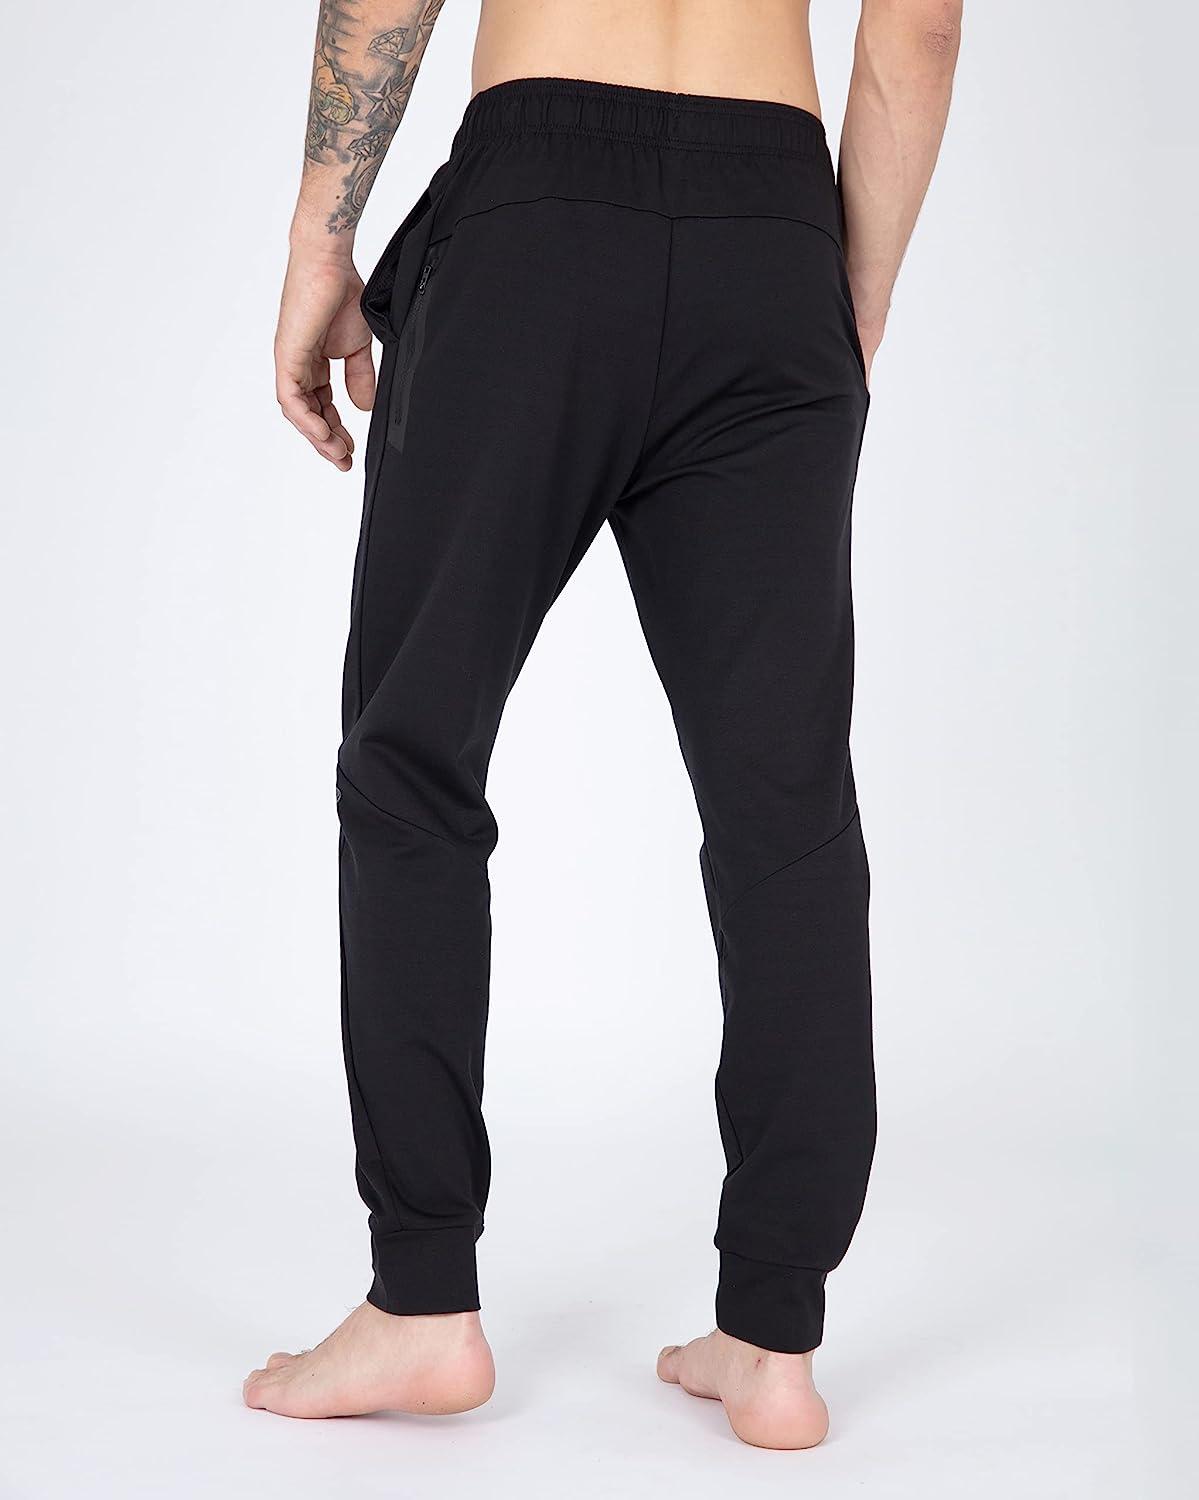 Apana Black Yoga Pants NWT Size Large